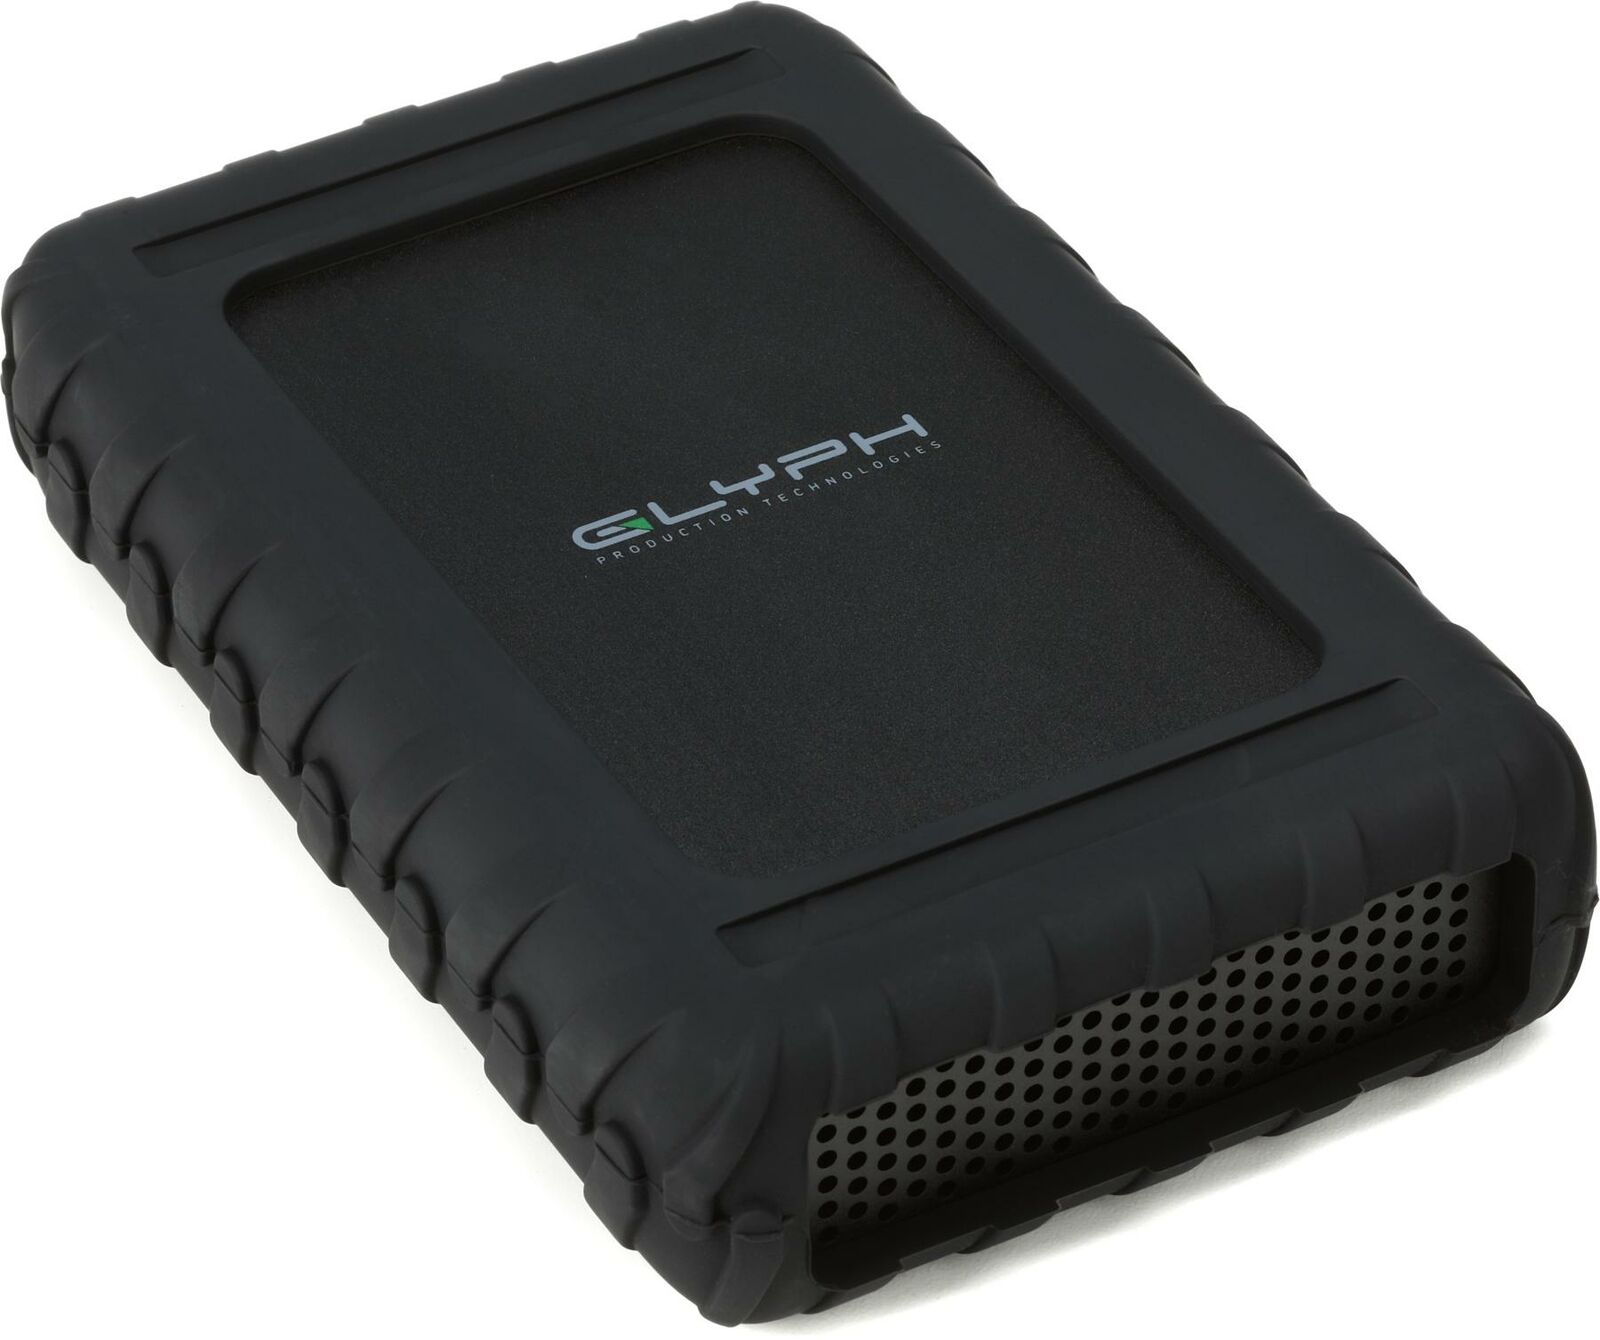 Glyph Blackbox Pro 2TB Rugged Desktop Hard Drive